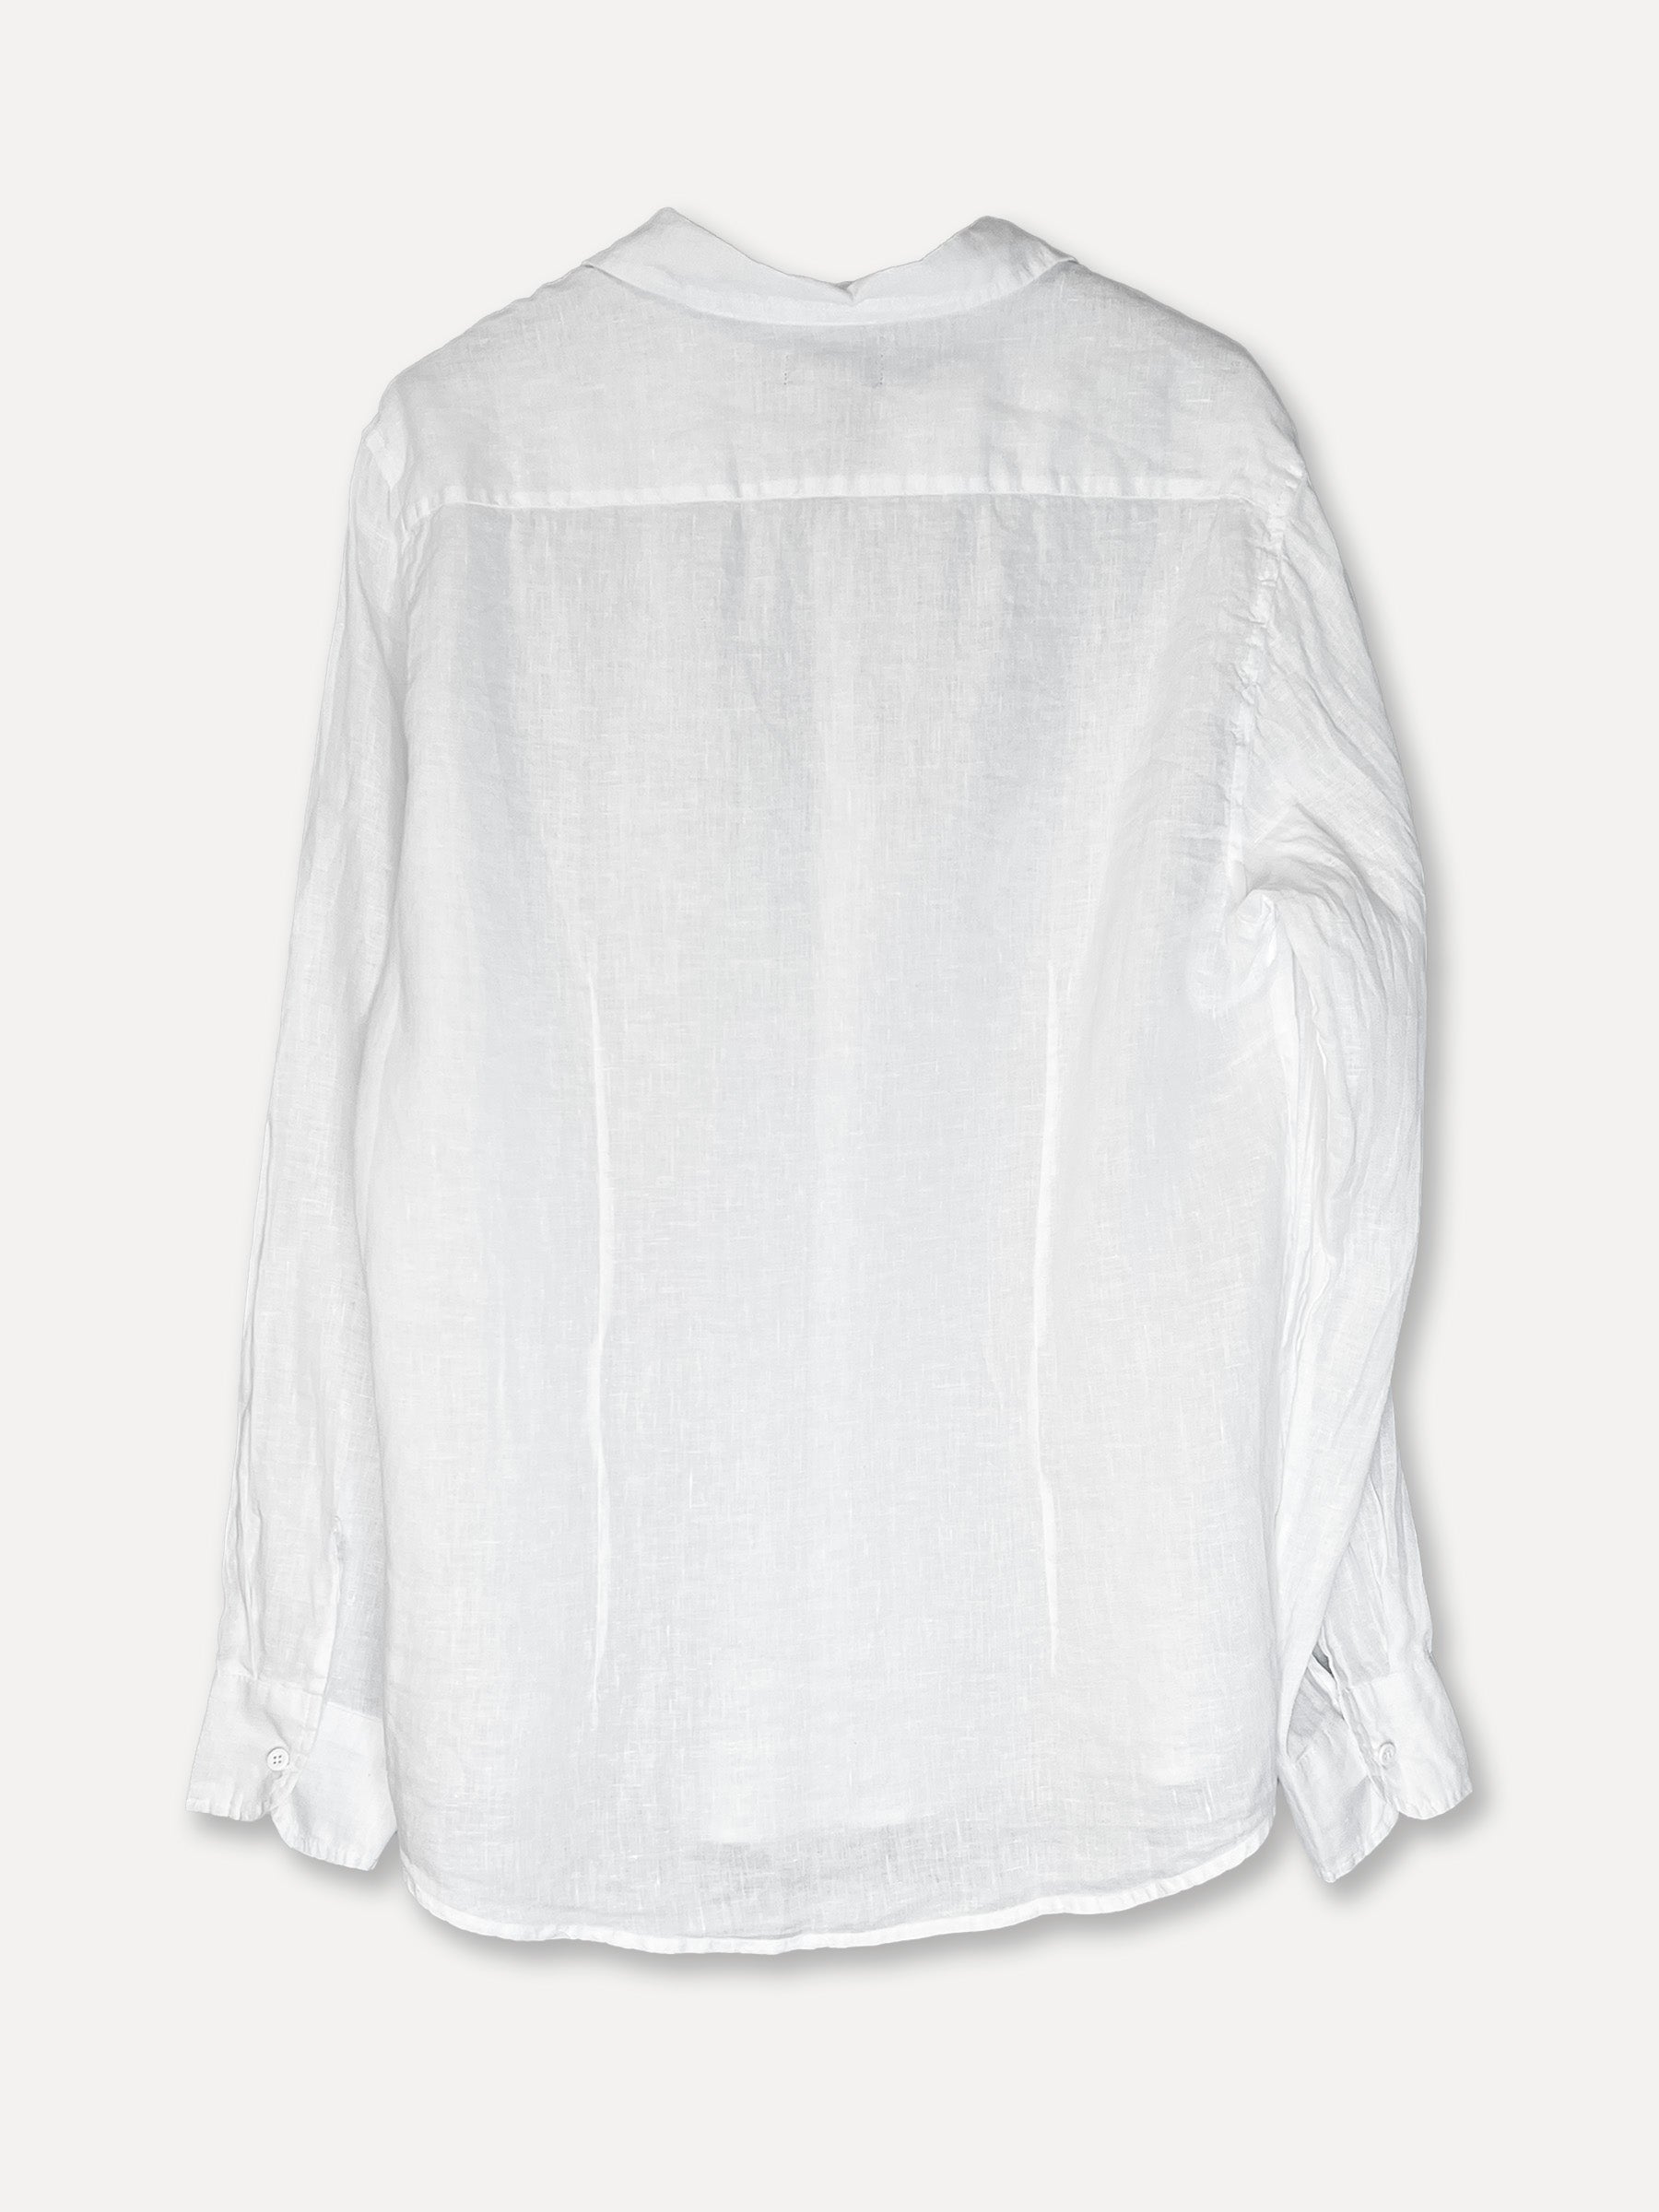 ABBE Shirt, White